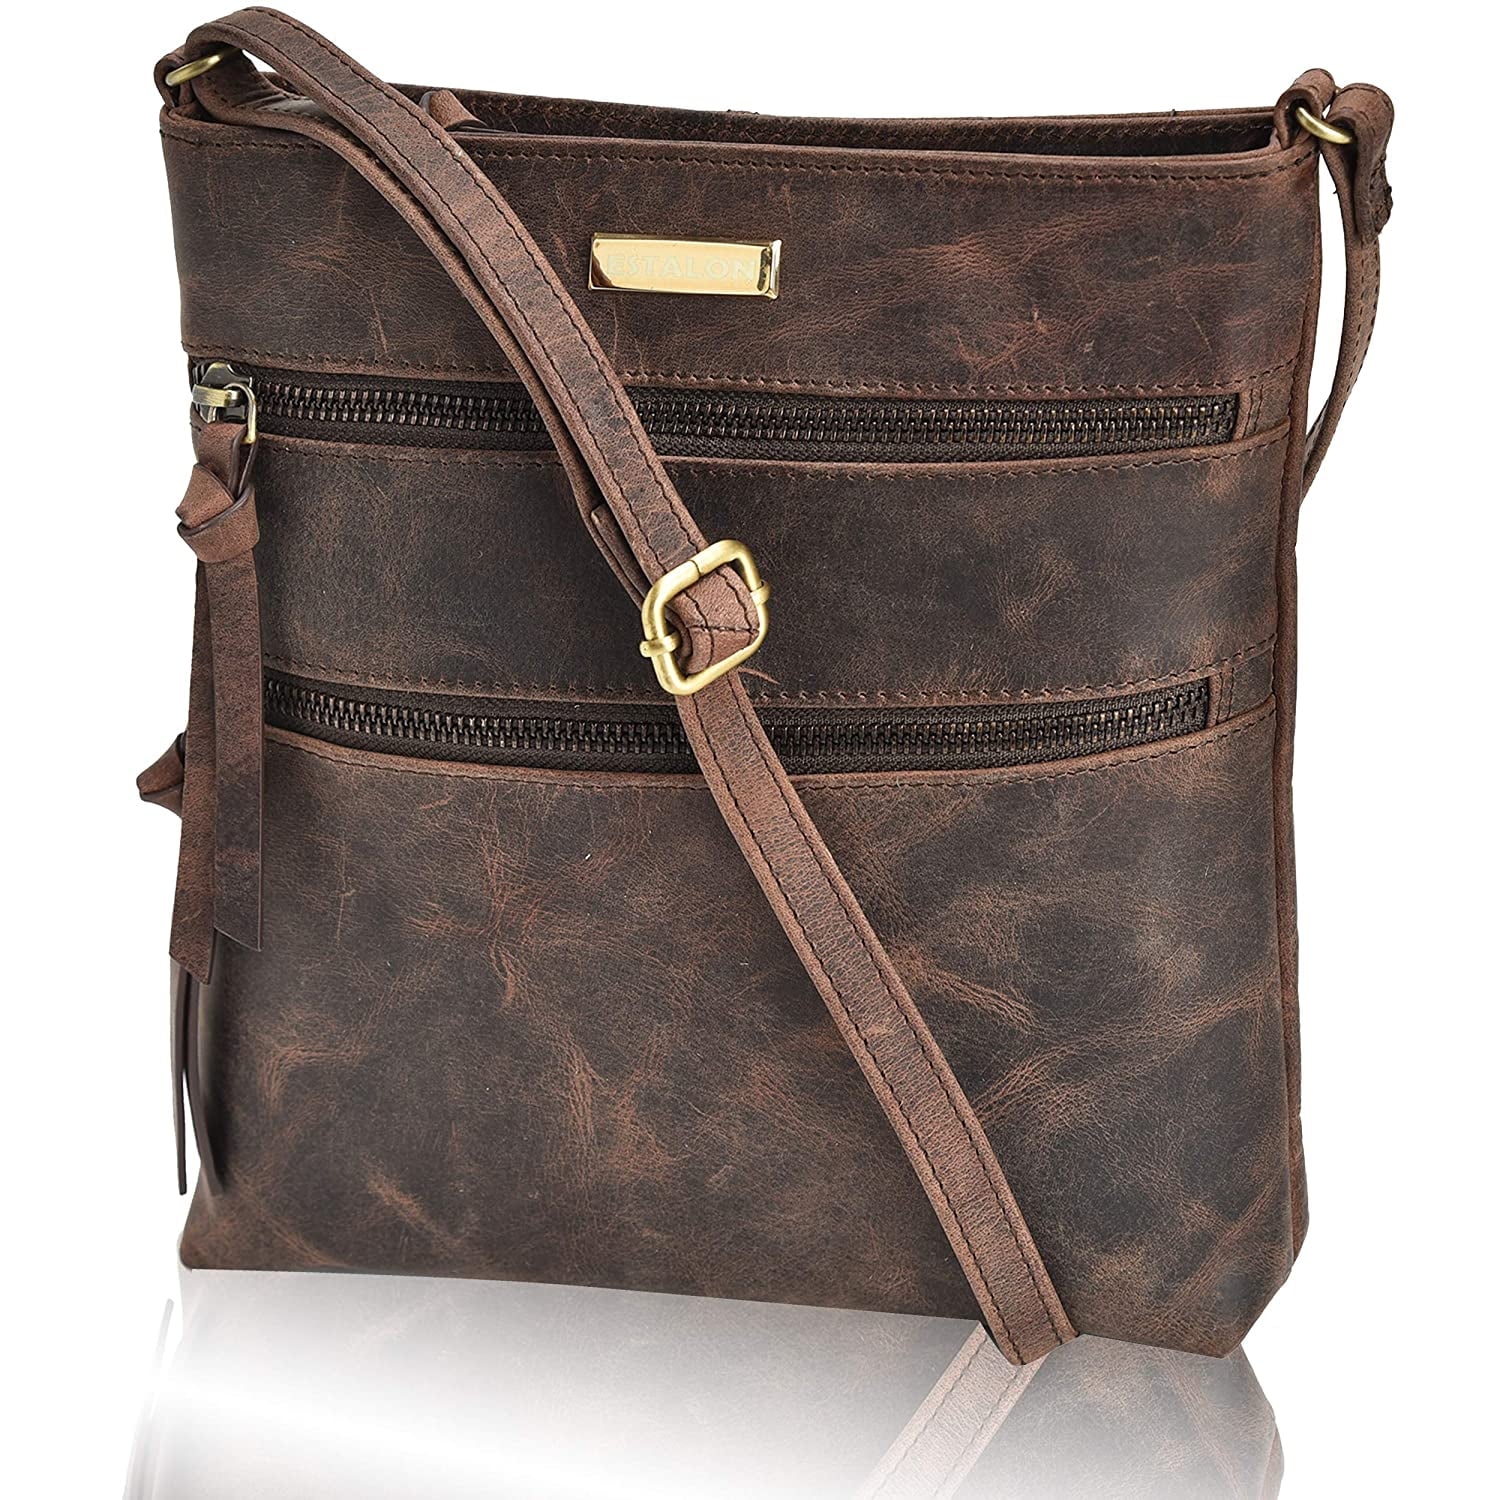 Real Leather Small Vintage Adjustable Shoulder Bag Crossbody Bags for Women